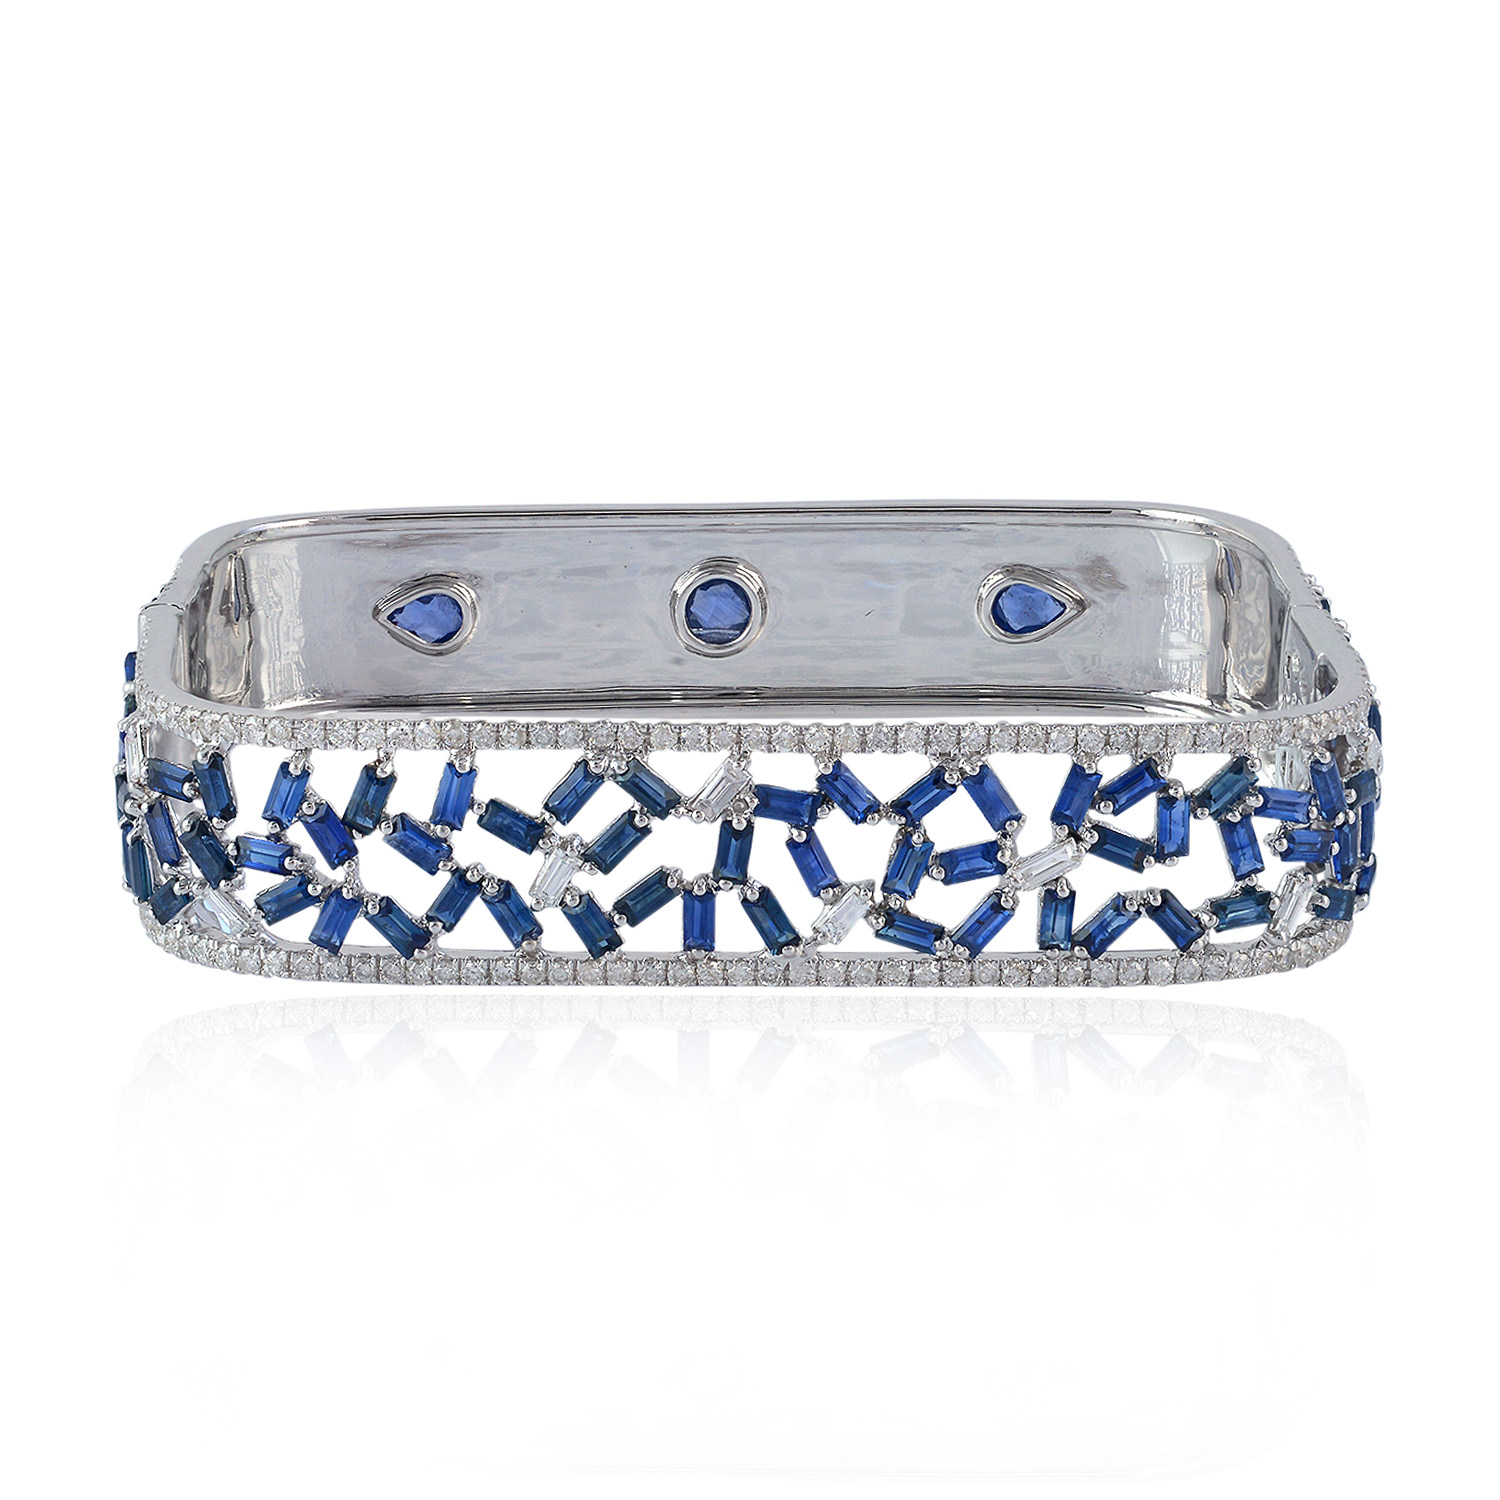 Women Day Sale 18k White Gold Baguette Diamond Bracelet Sapphire Bangle Jewelry | eBay